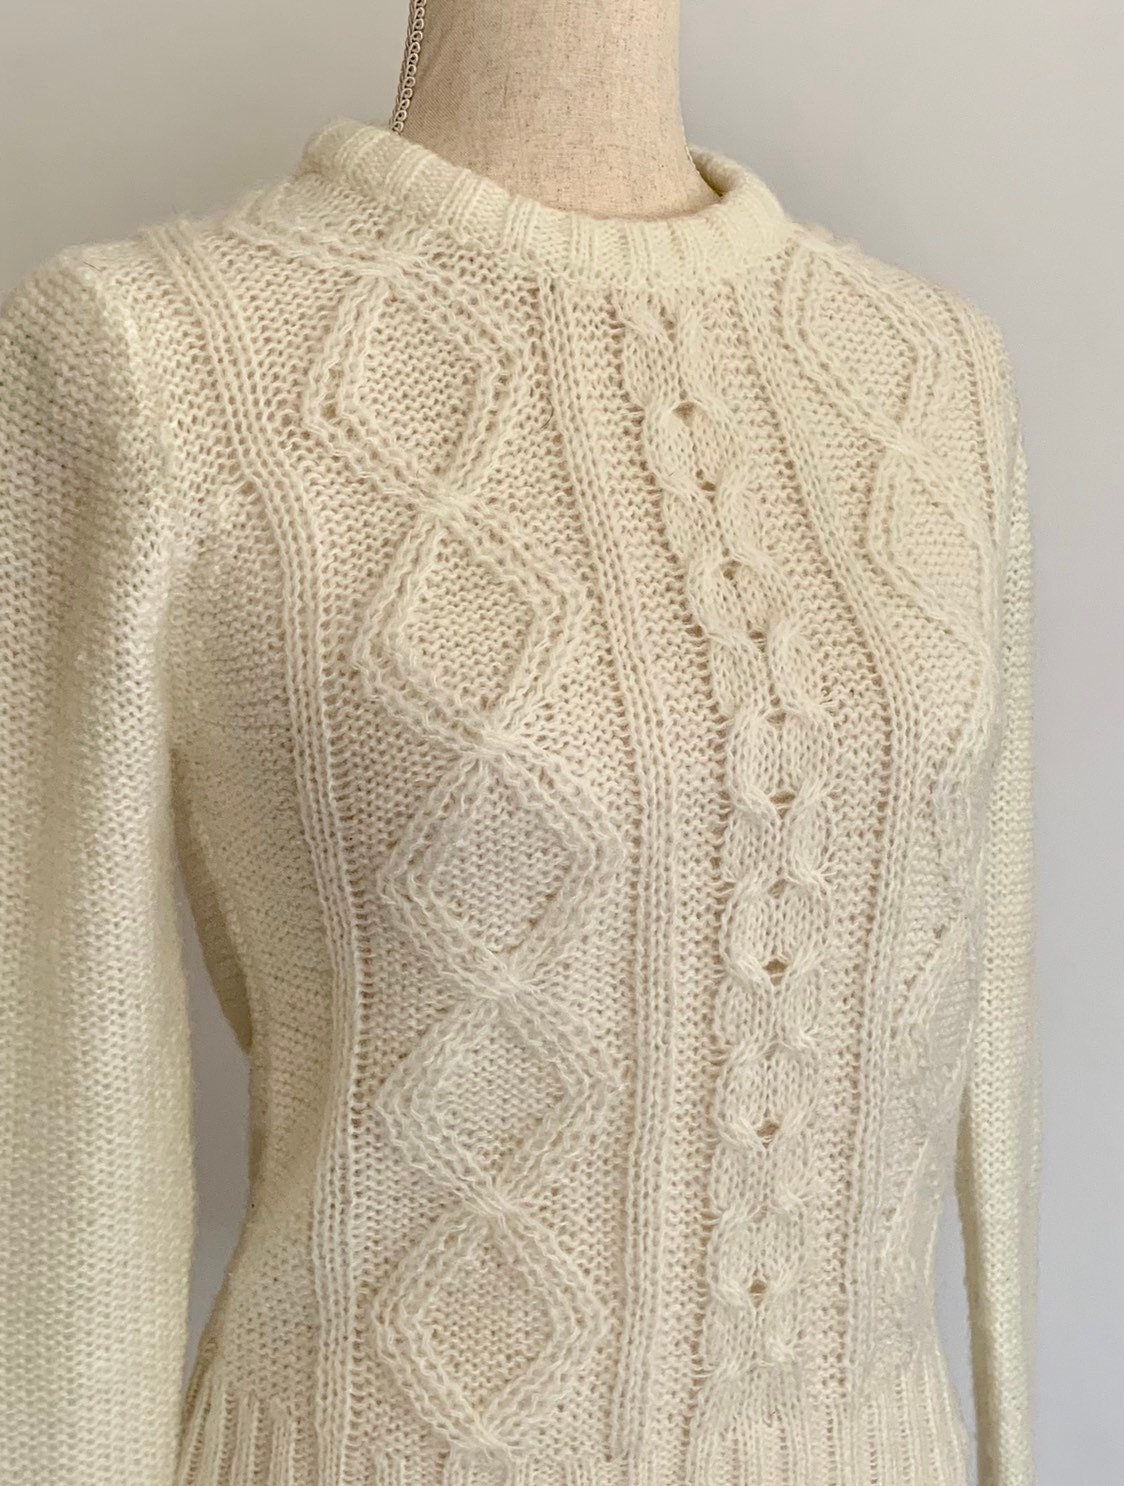 Winter White Fisherman Sweater Vintage 70s 80s Aran Style Women's ...